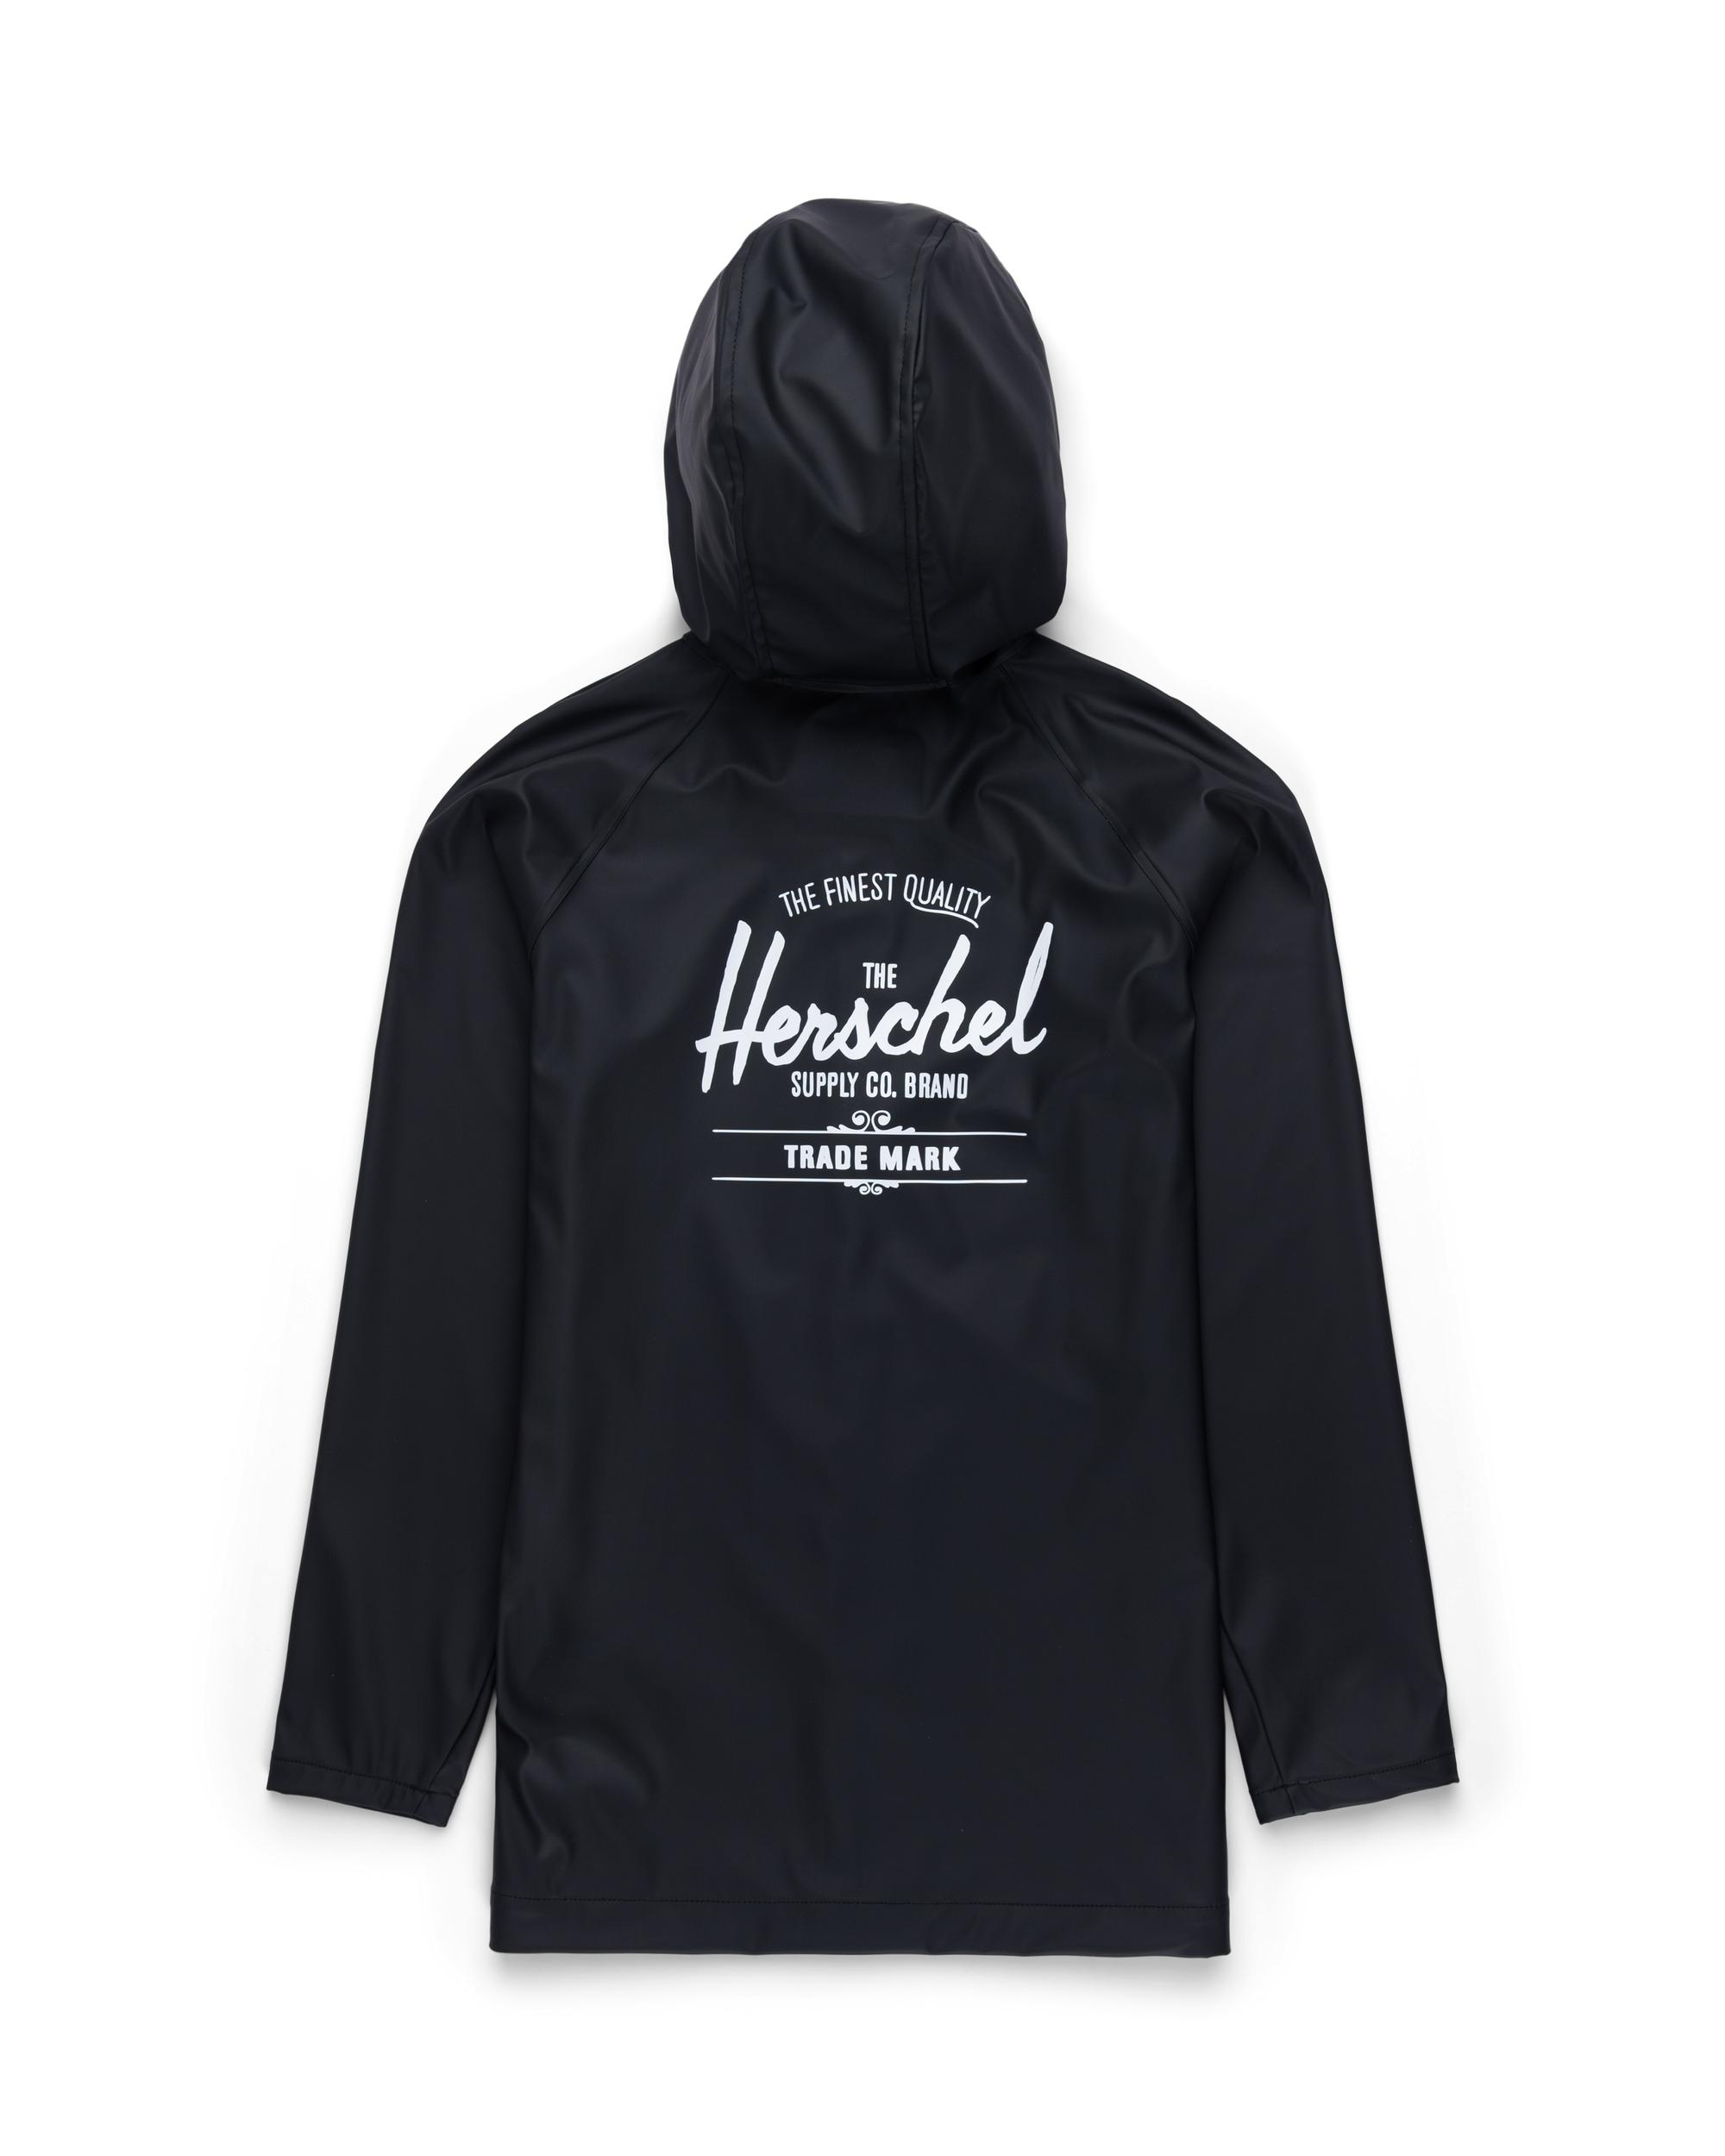 Herschel - Women's Rainwear Classic - Black/White Classic Logo 2